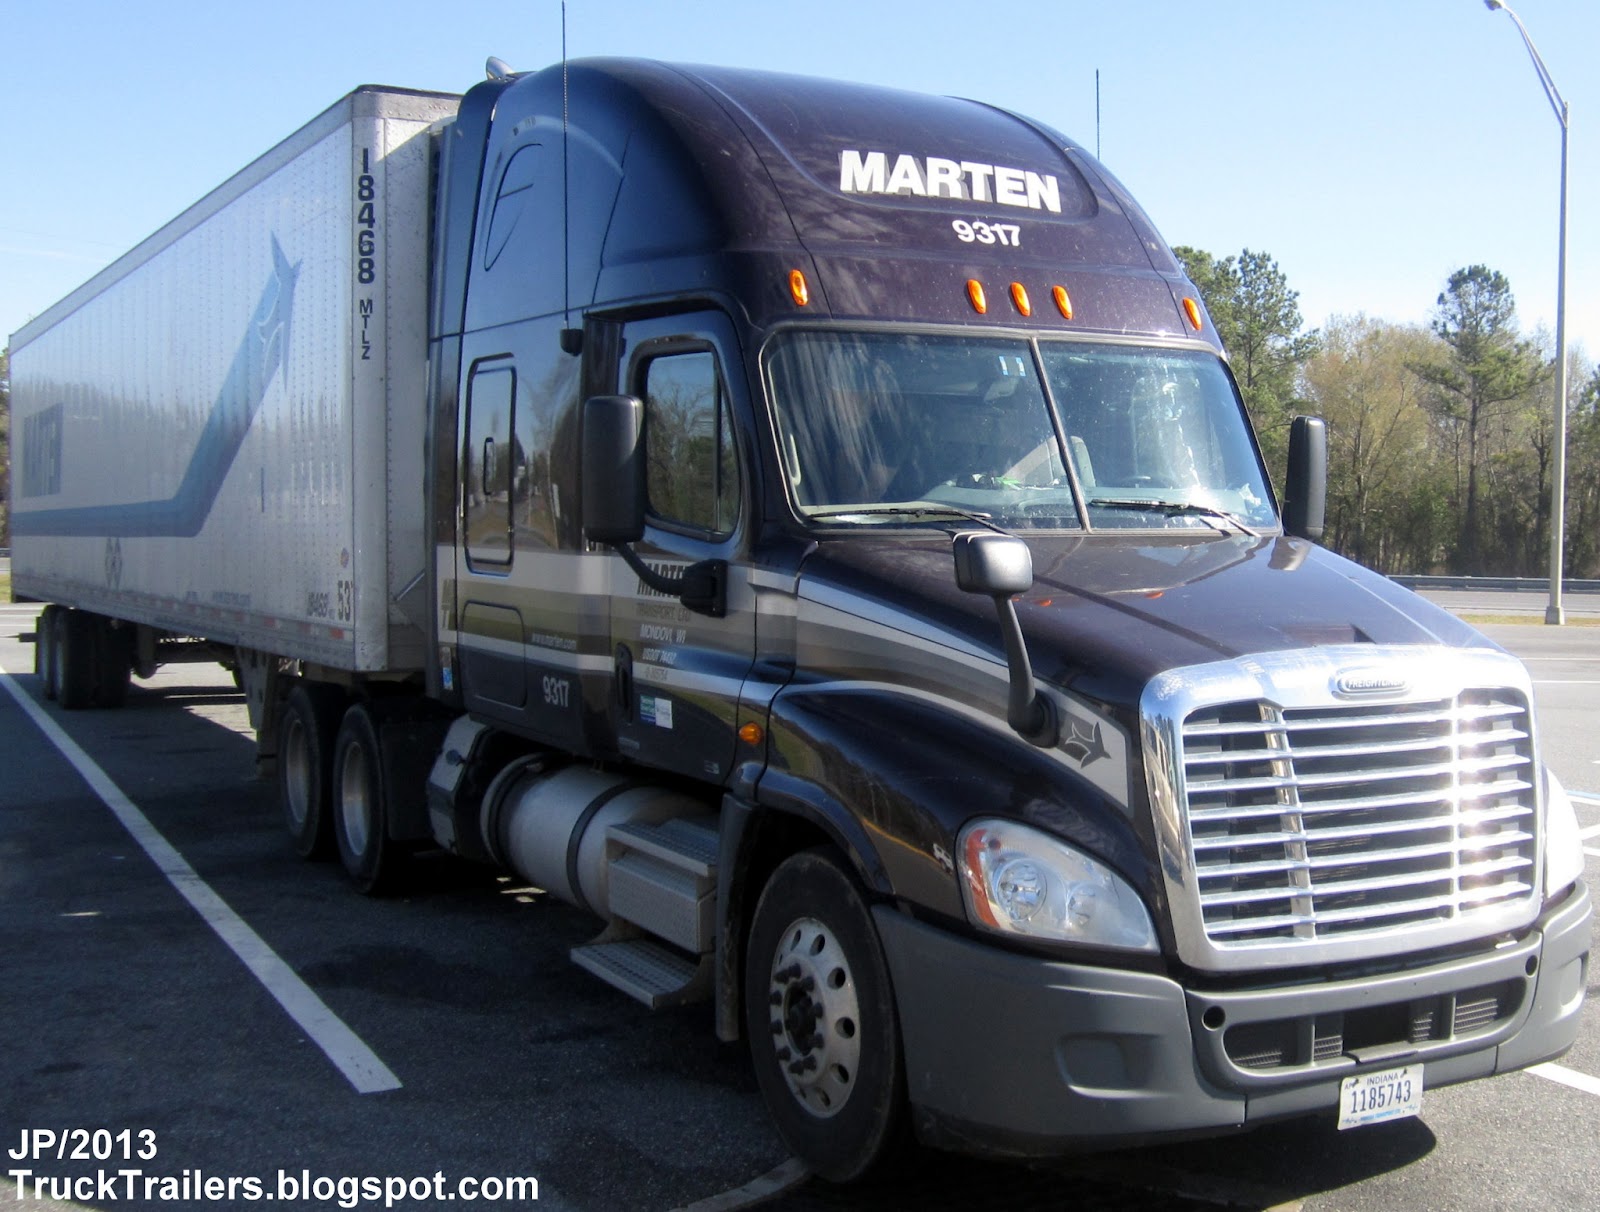 TRUCK TRAILER Trucking Express Co Logistic Diesel Image Mack